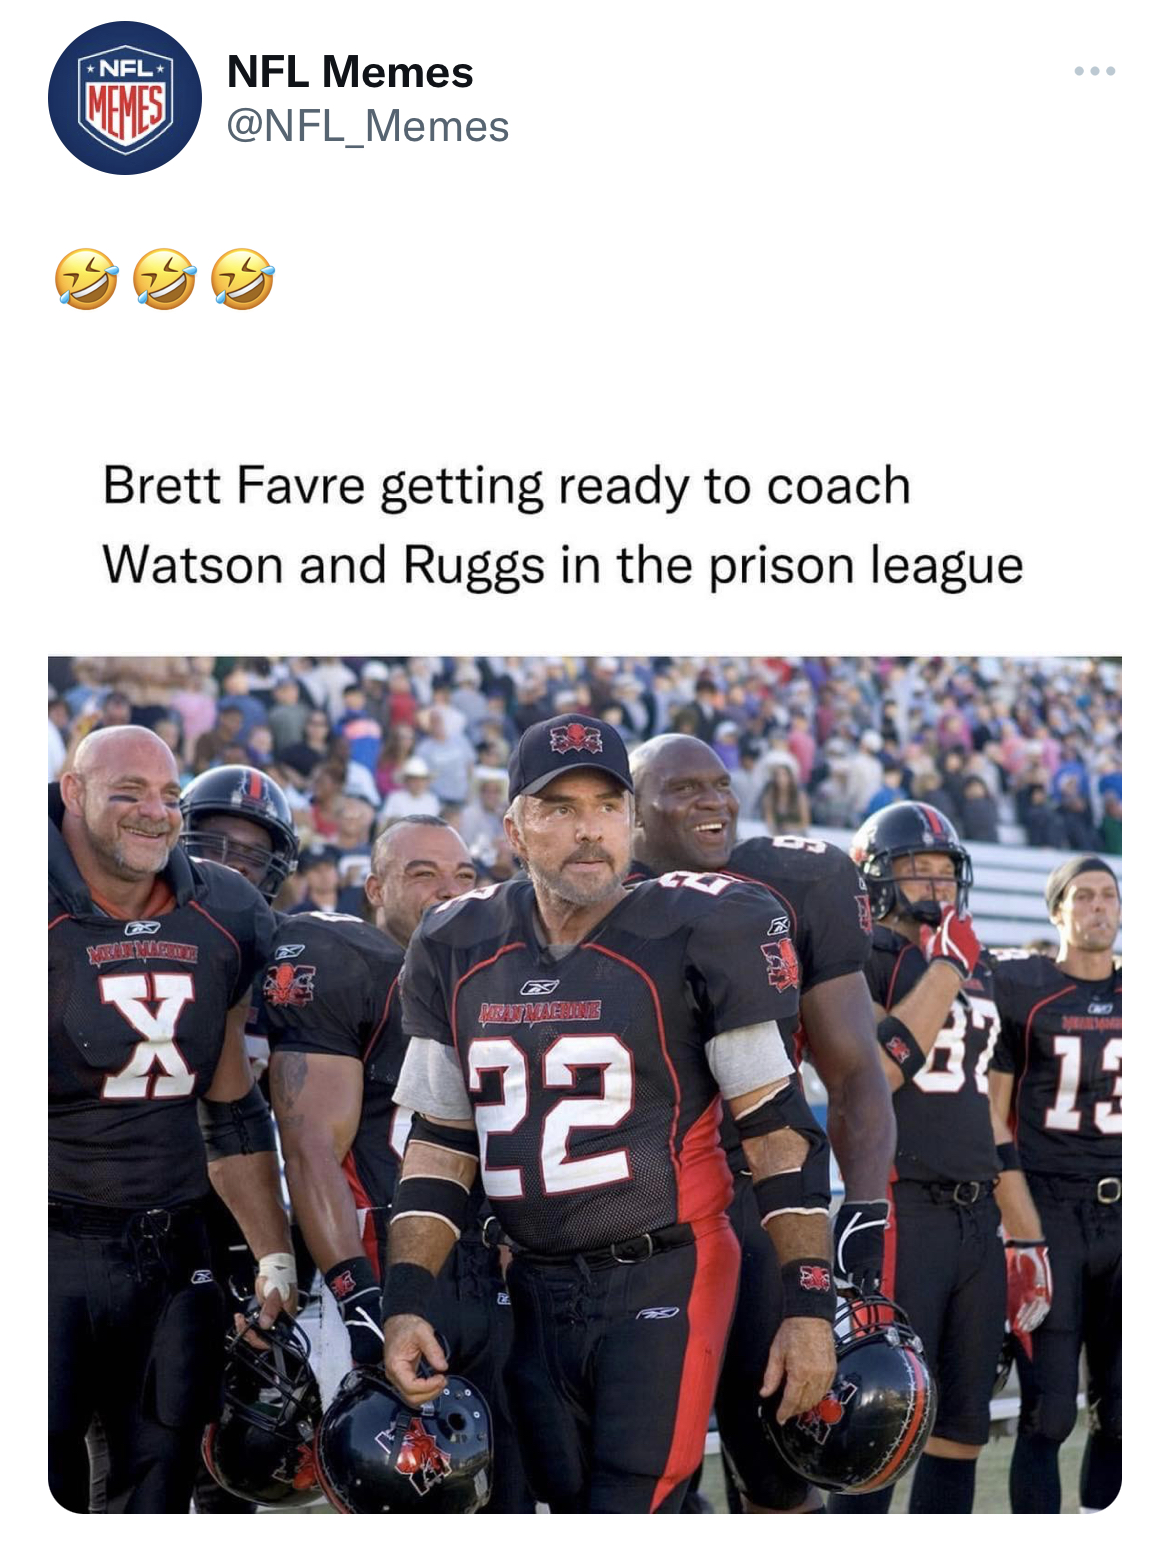 nfl football tweets week 3 - bill goldberg the longest yard - Nfl Meme Nfl Memes Brett Favre getting ready to coach Watson and Ruggs in the prison league X Brom 422 37 13